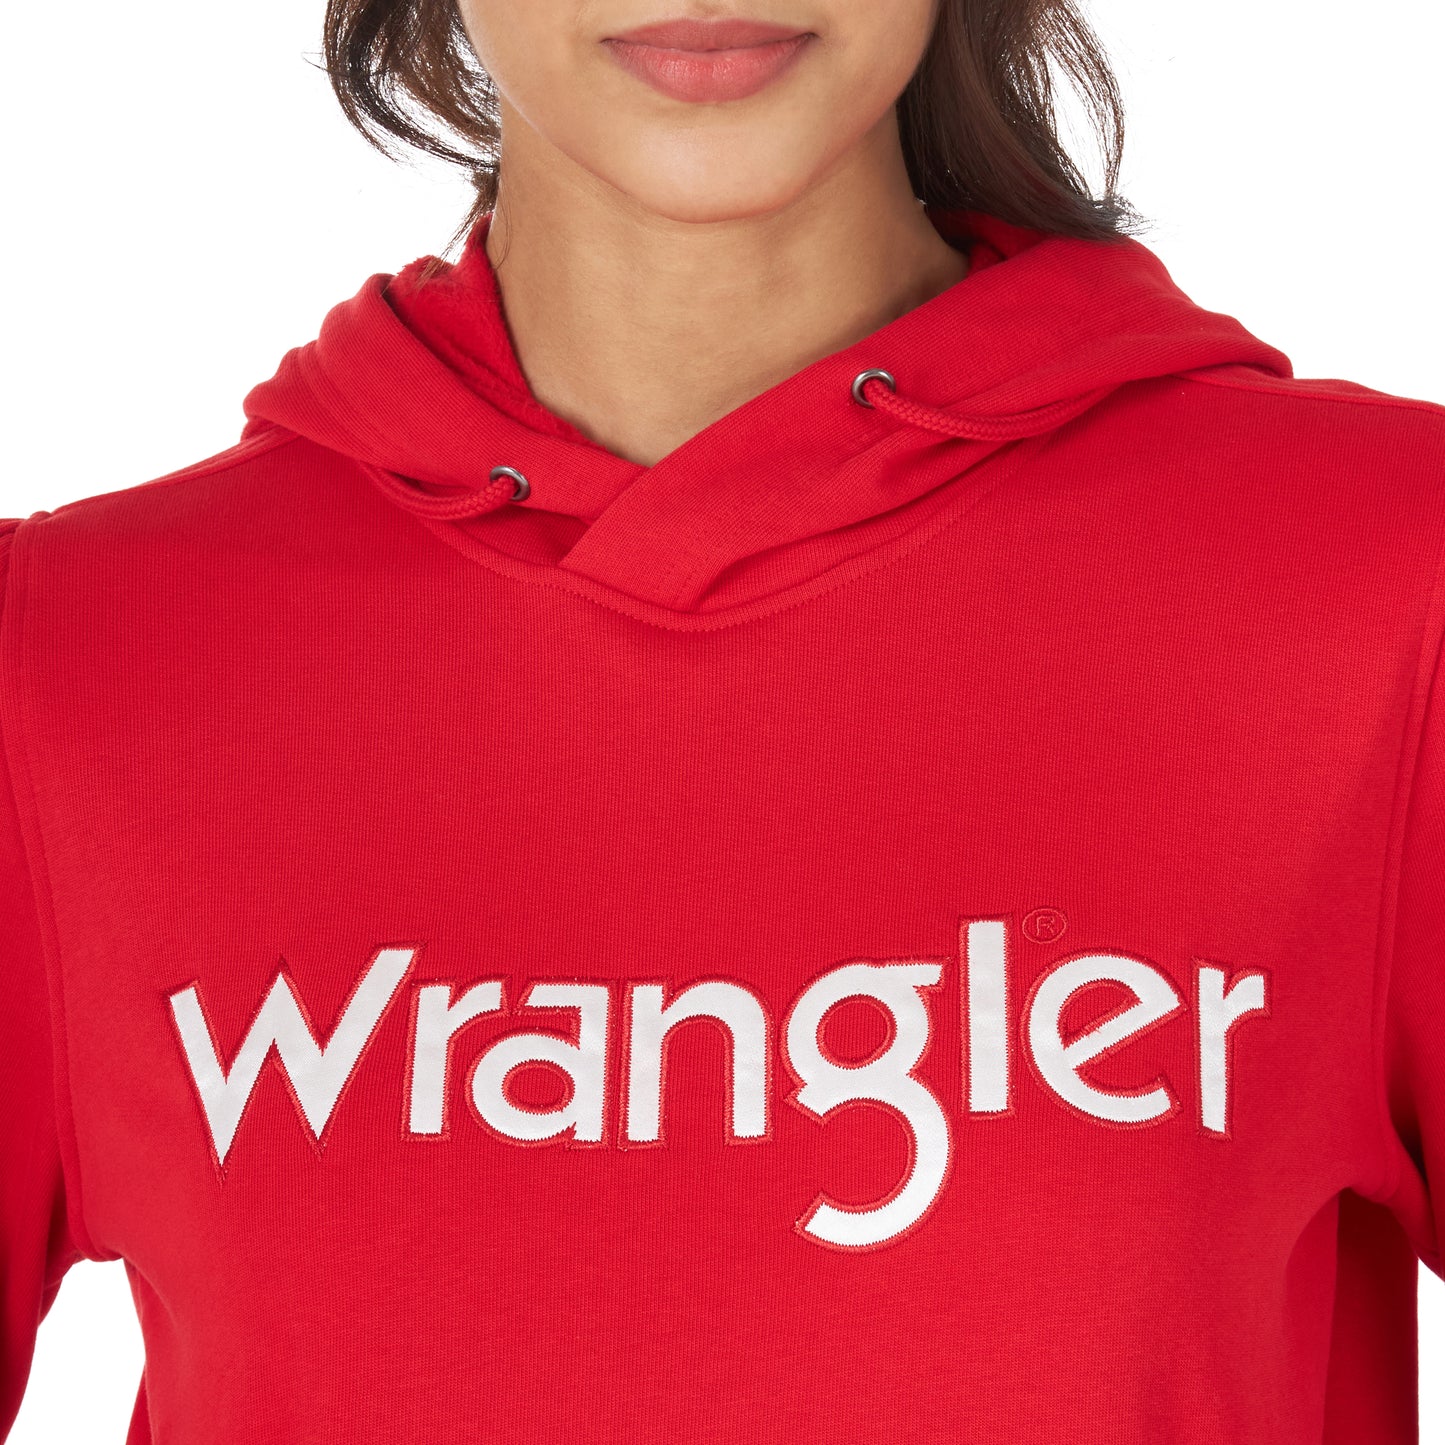 Wrangler Retro Hoodie - Red